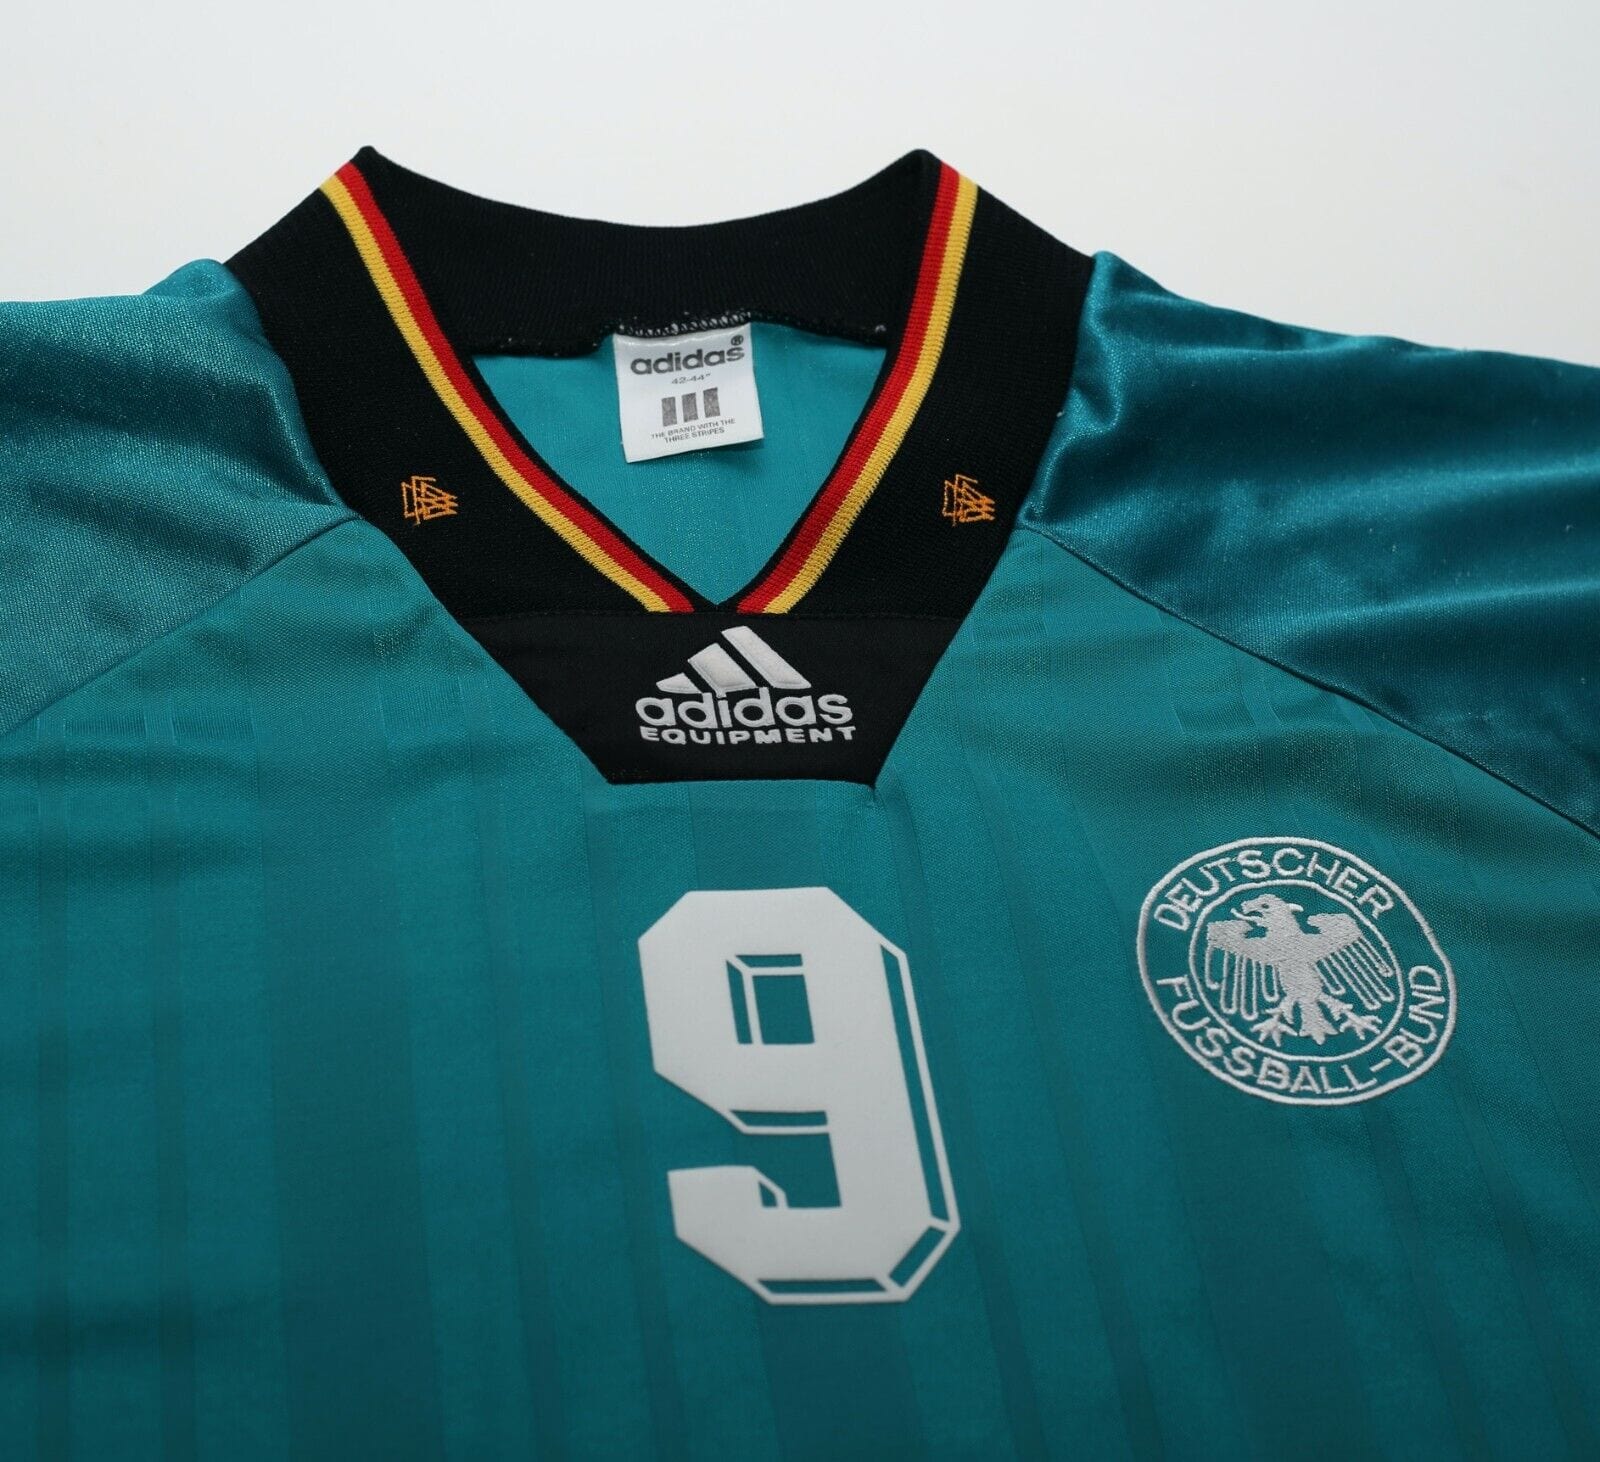 1992/94 VOLLER #9 Germany Vintage adidas Away Football Shirt (L) EURO 92